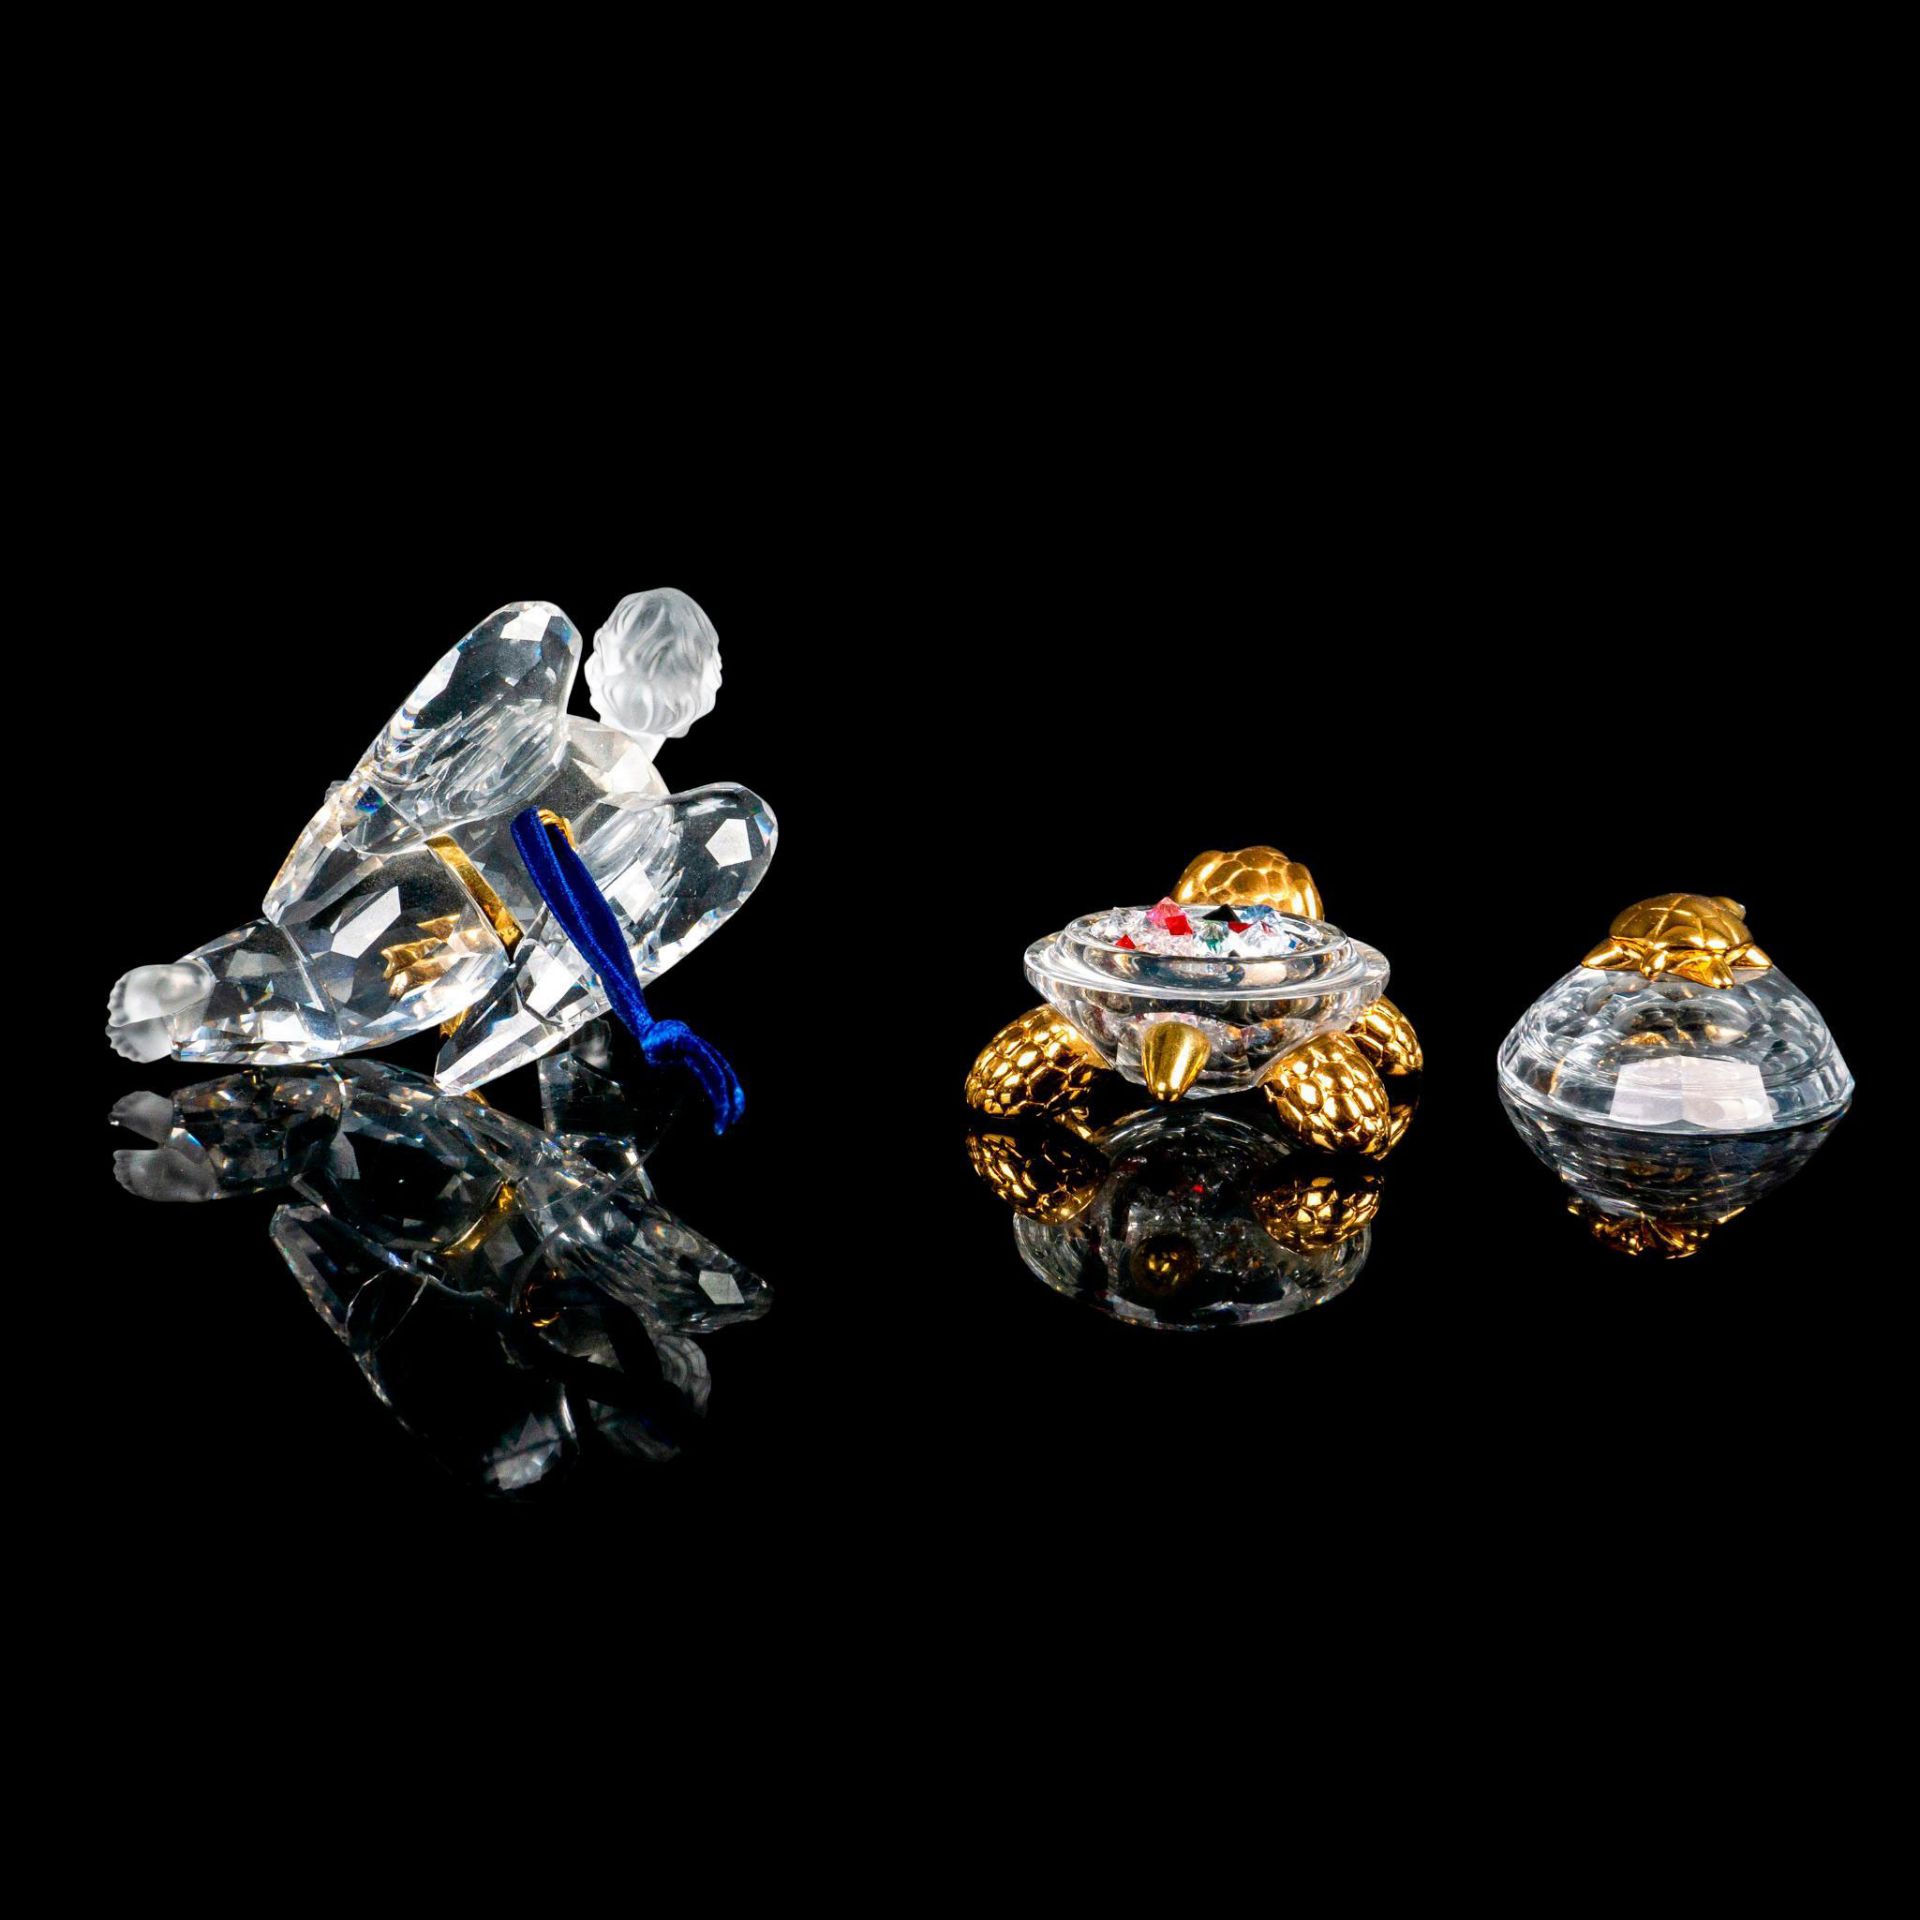 2pc Swarovski Crystal Ornament + Jewel Box - Image 2 of 3